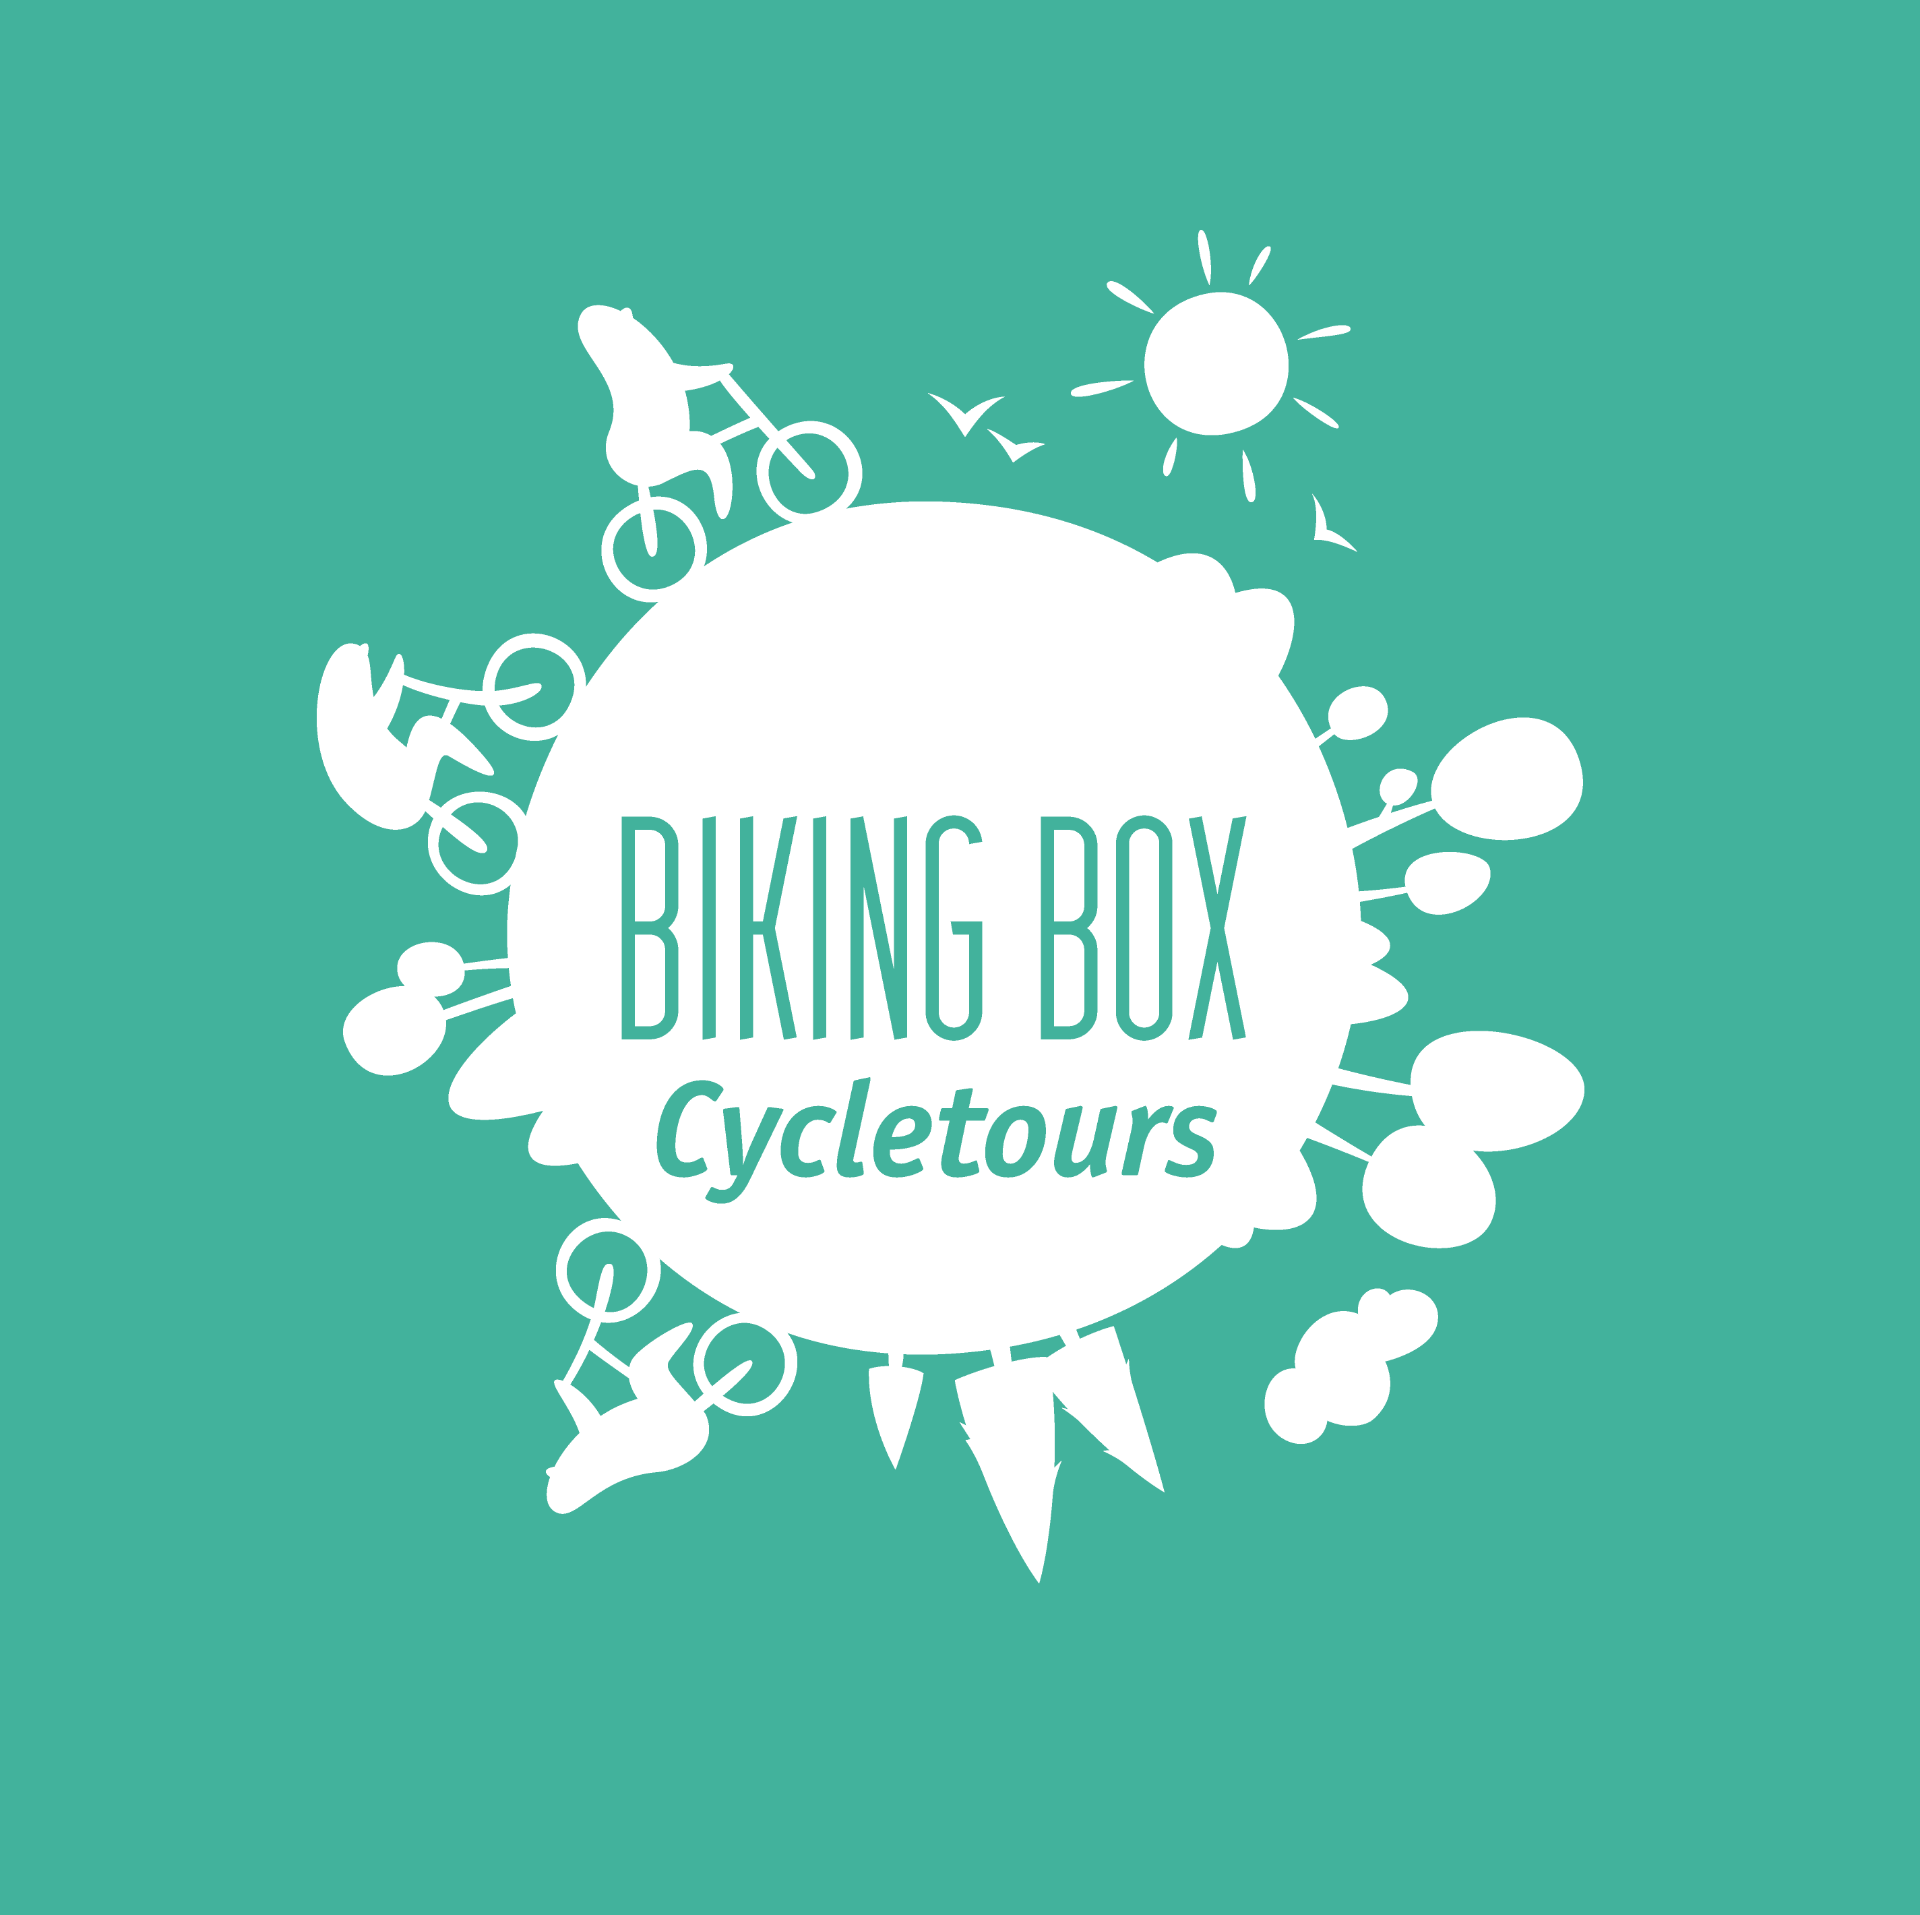 Biking Box Cycle Tours - rent a bike - guided tours - cycling guide - Great War tours - In Flanders Fields